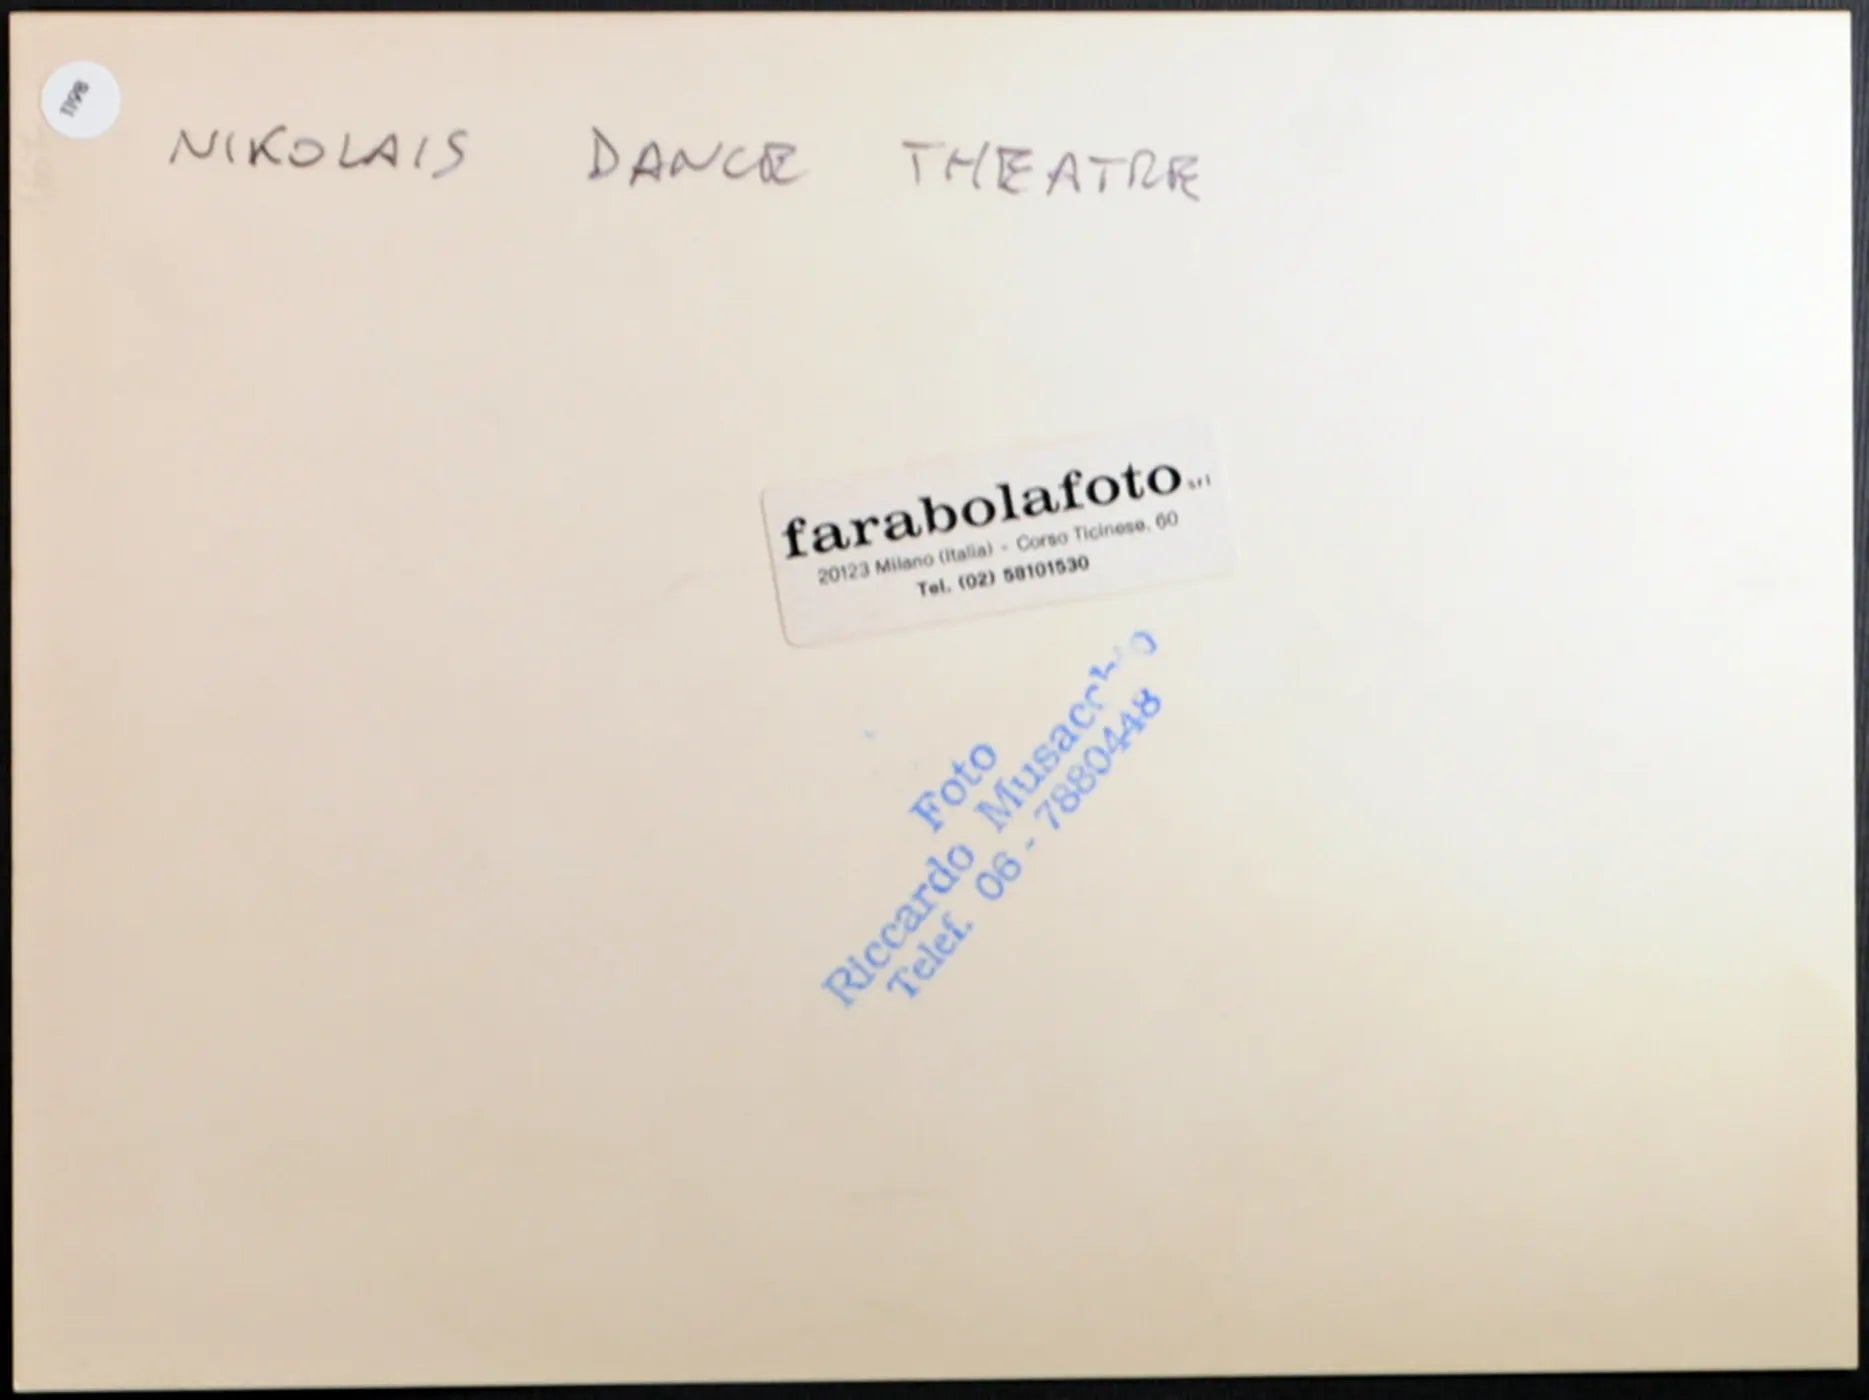 Nikolais Dance Theatre anni 90 Ft 1198 - Stampa 24x18 cm - Farabola Stampa ai sali d'argento